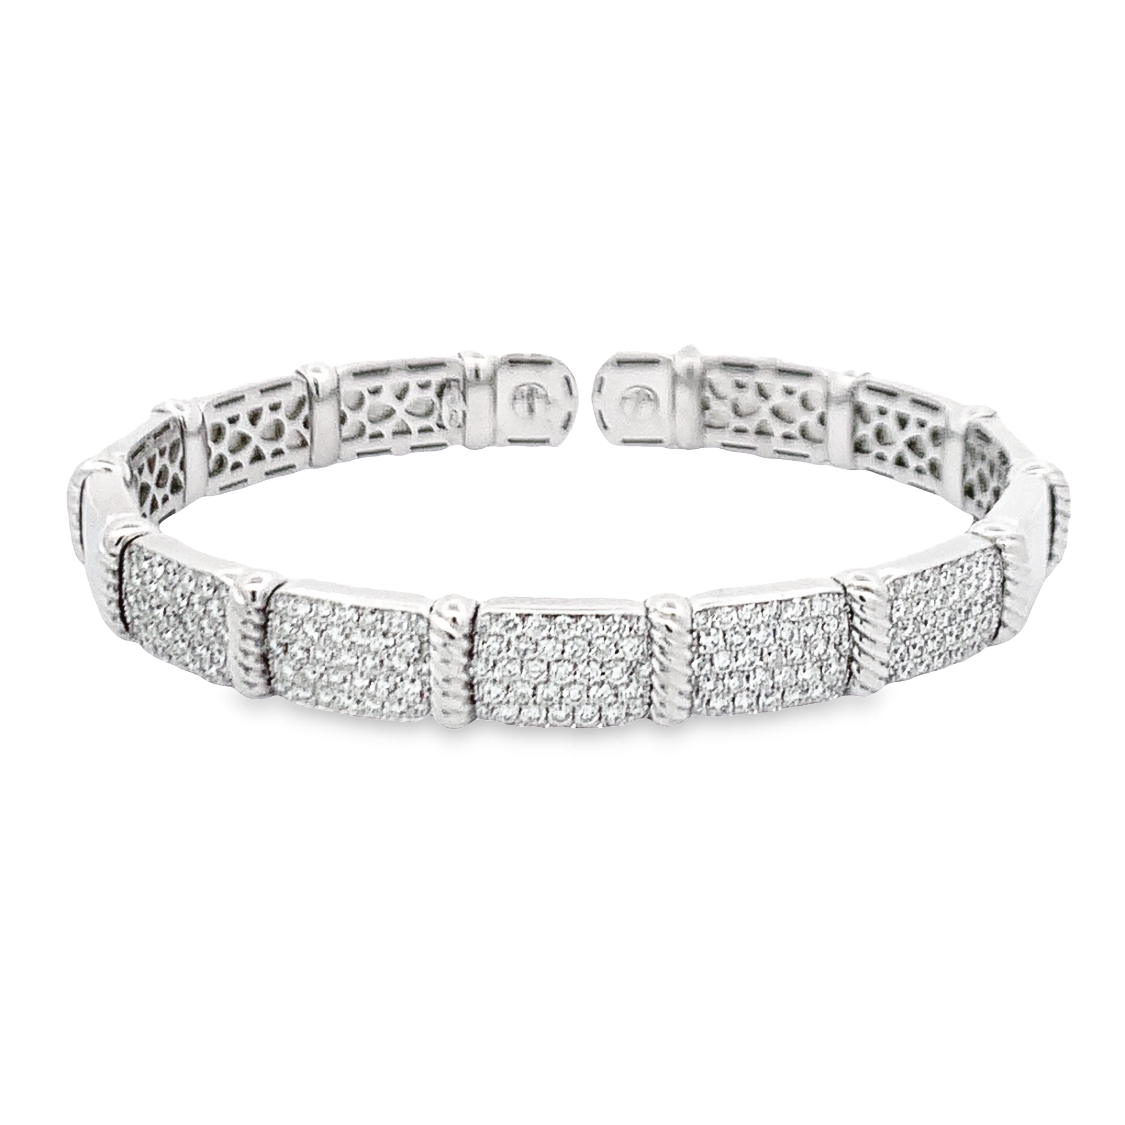 Damaso 18K White Gold Diamond Bracelet